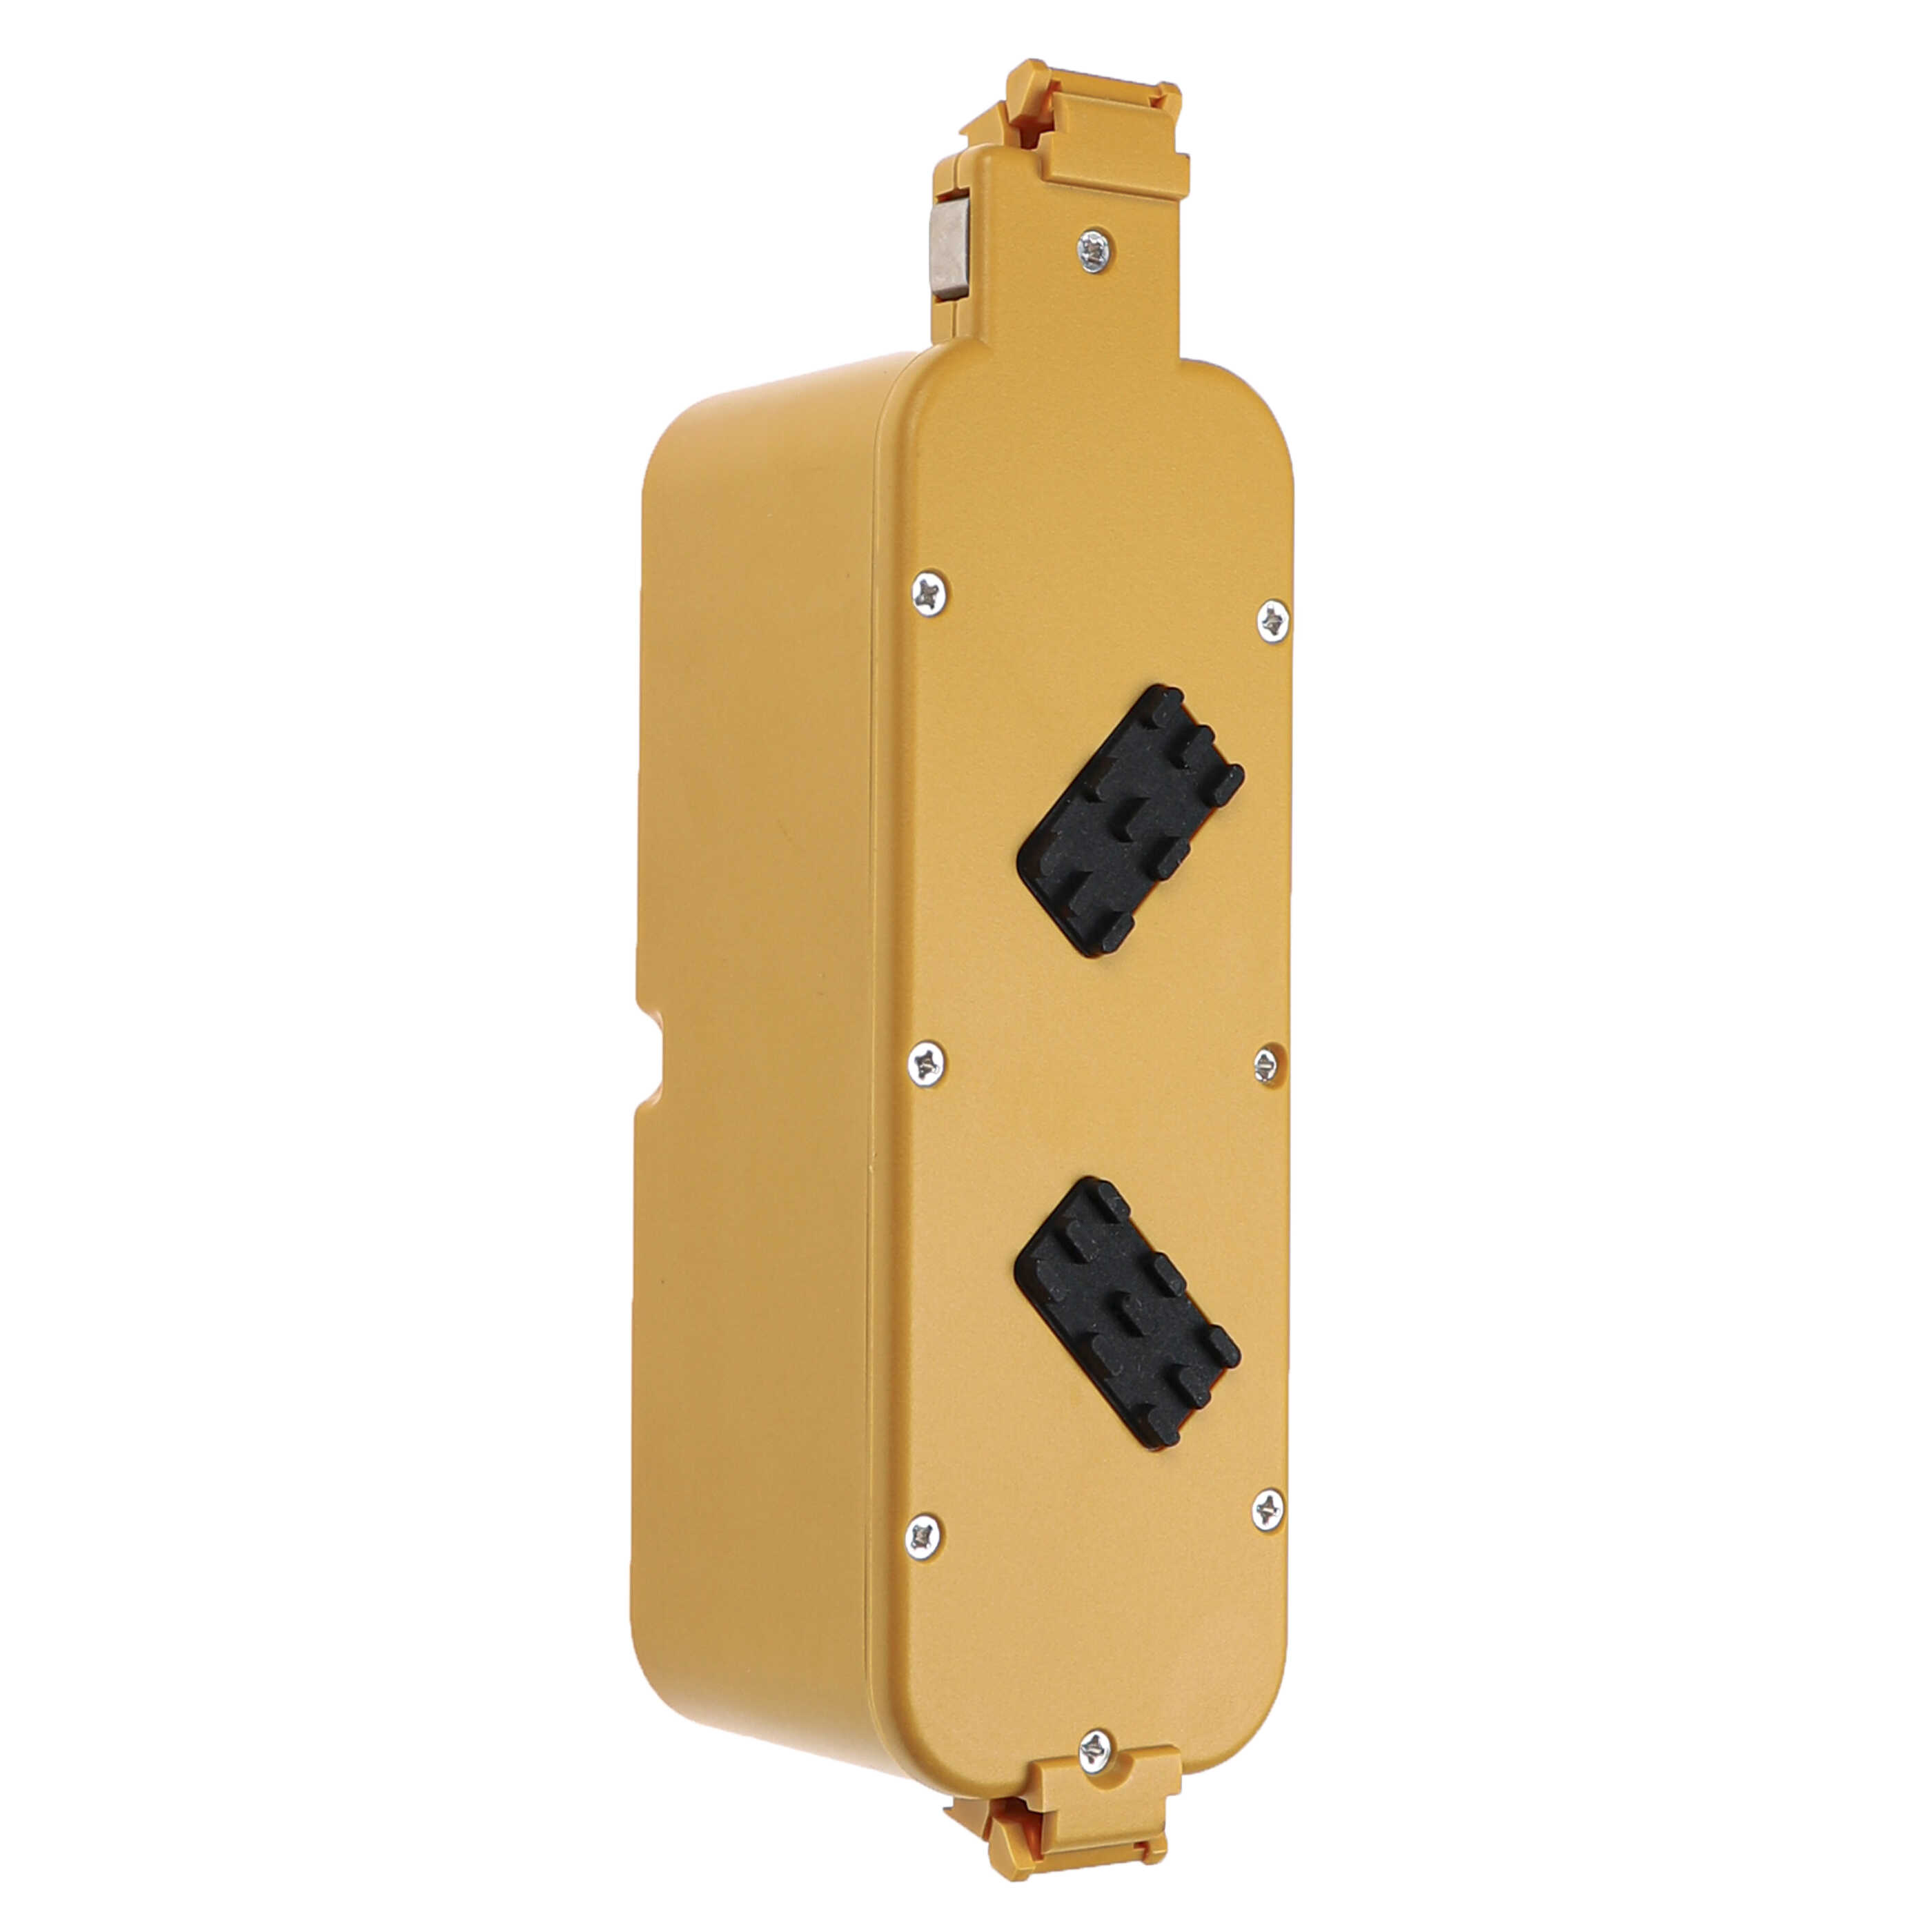 Akumulator do robota zamiennik APS 4905, NC-3493-919, 11700, 17373 - 4000 mAh 14,4 V NiMH, żółty